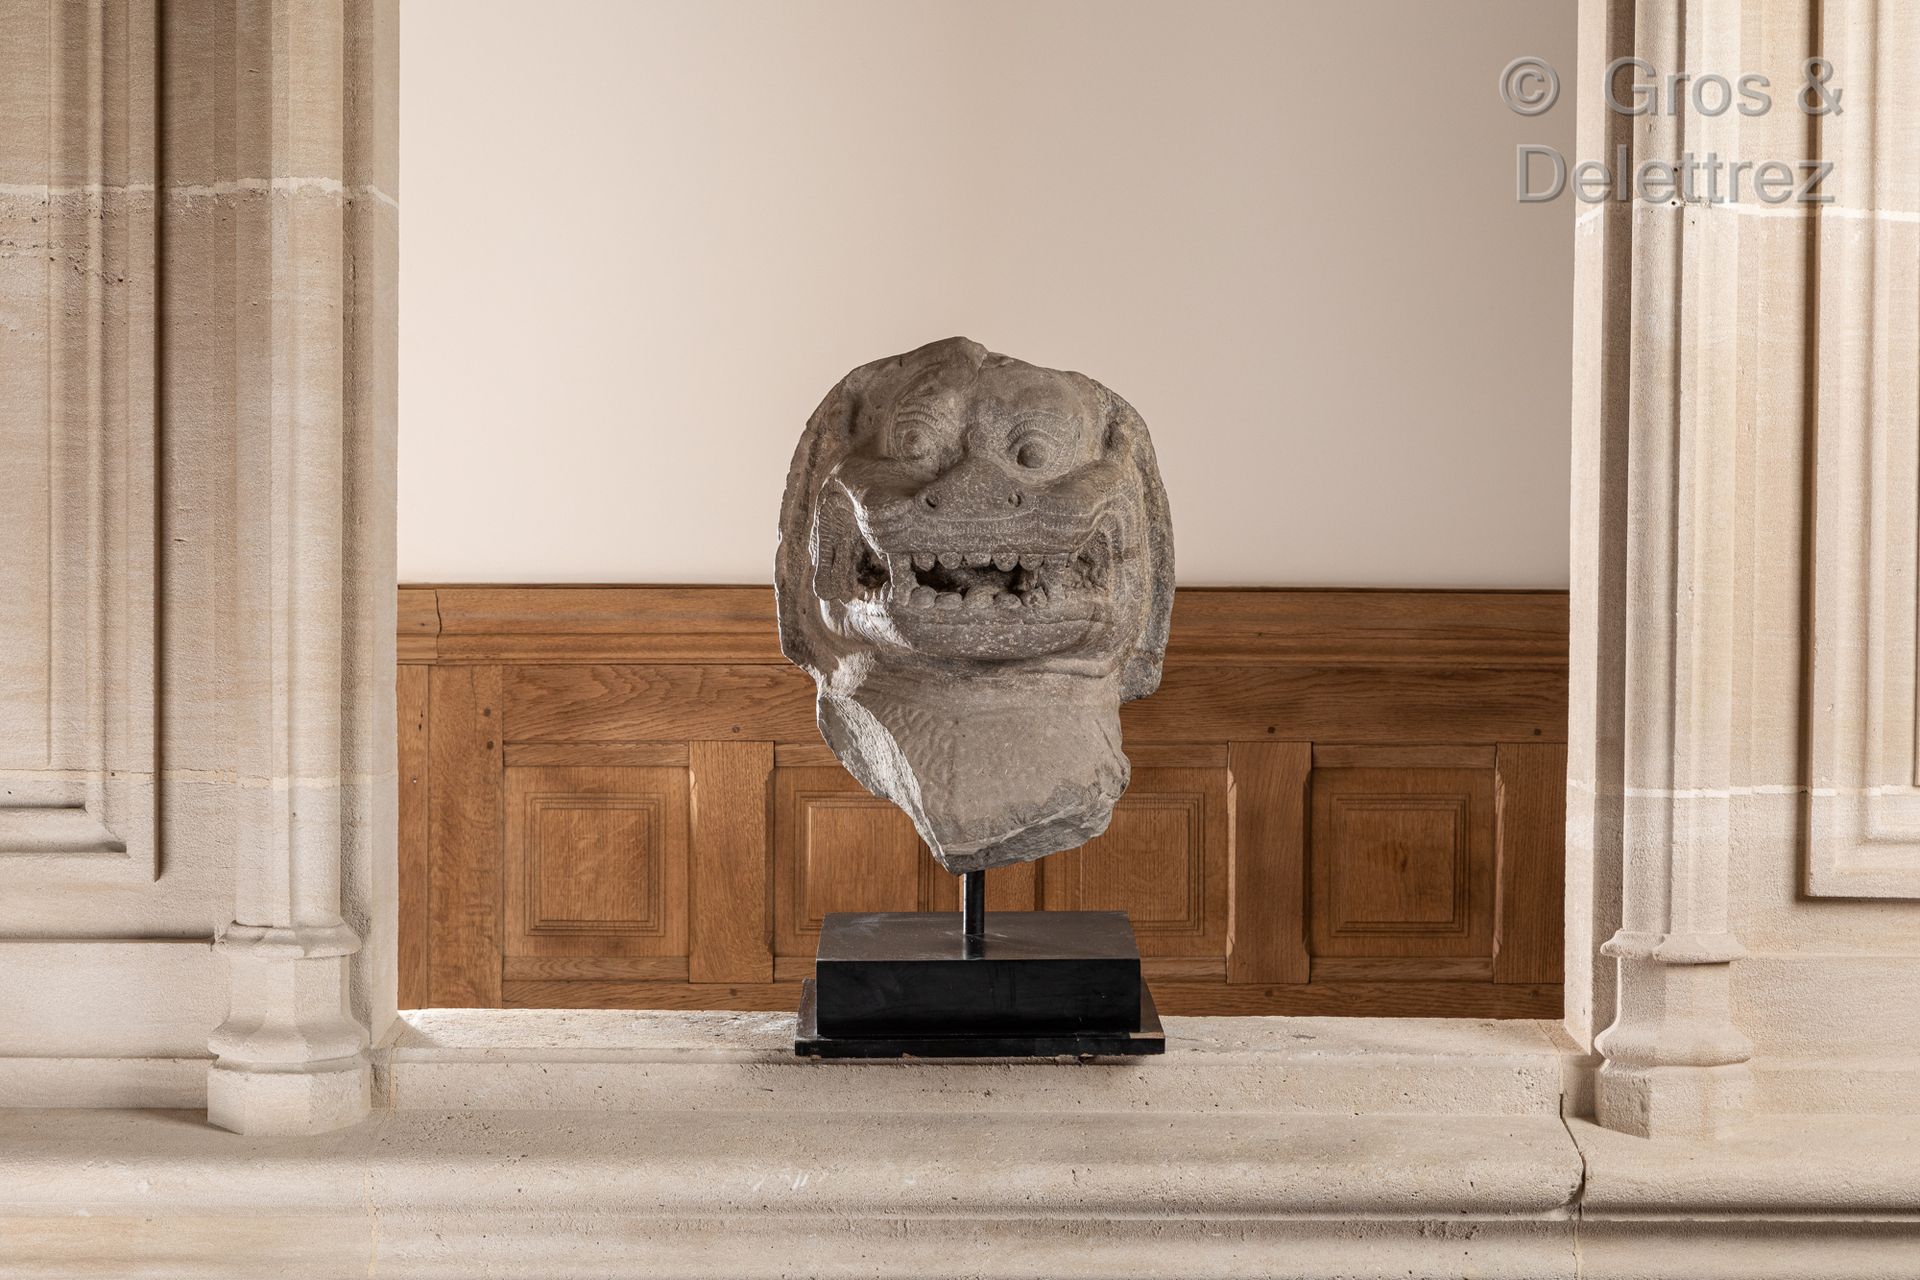 Null 狮子头被破译

米色砂岩雕塑

巴雍遗址，高棉语

柬埔寨，13世纪

高：49 - 宽：39 - 深：29厘米